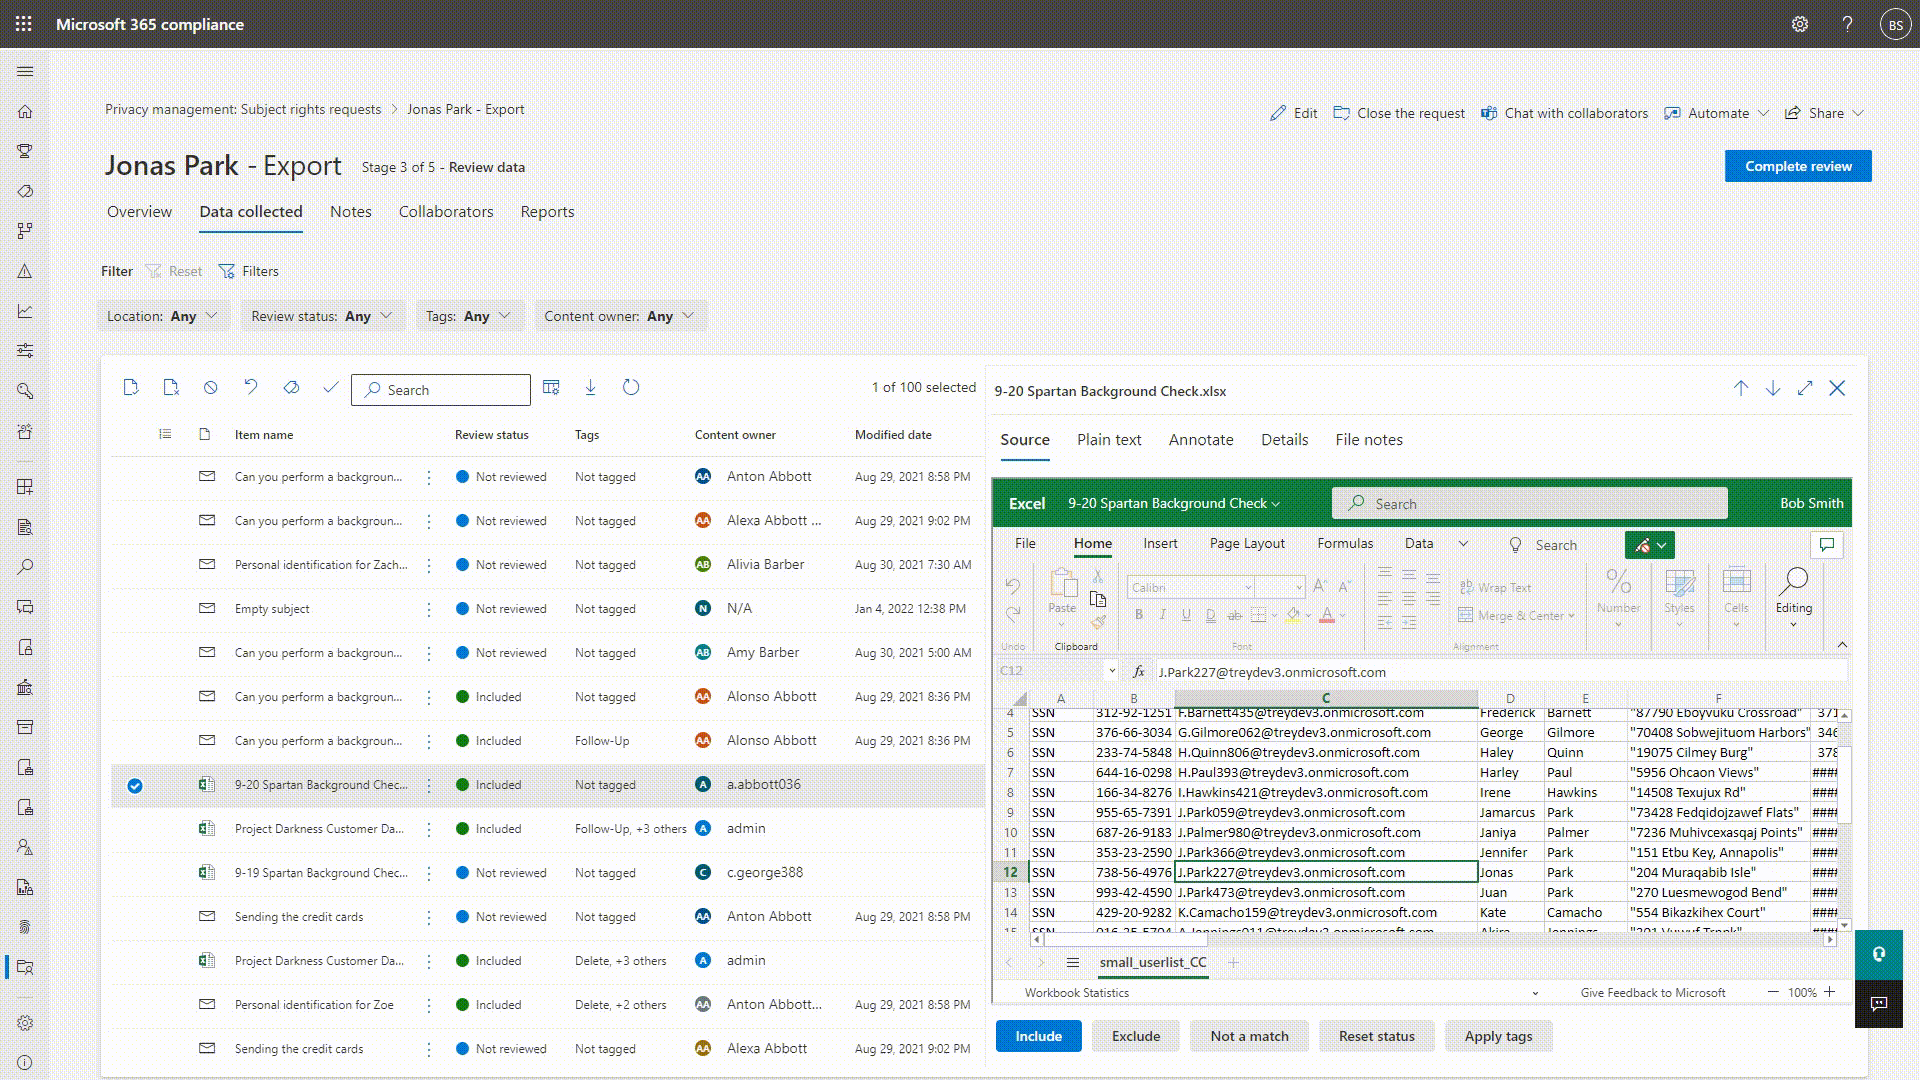 Animated image of Microsoft 365 compliance dashboard user redacting files.